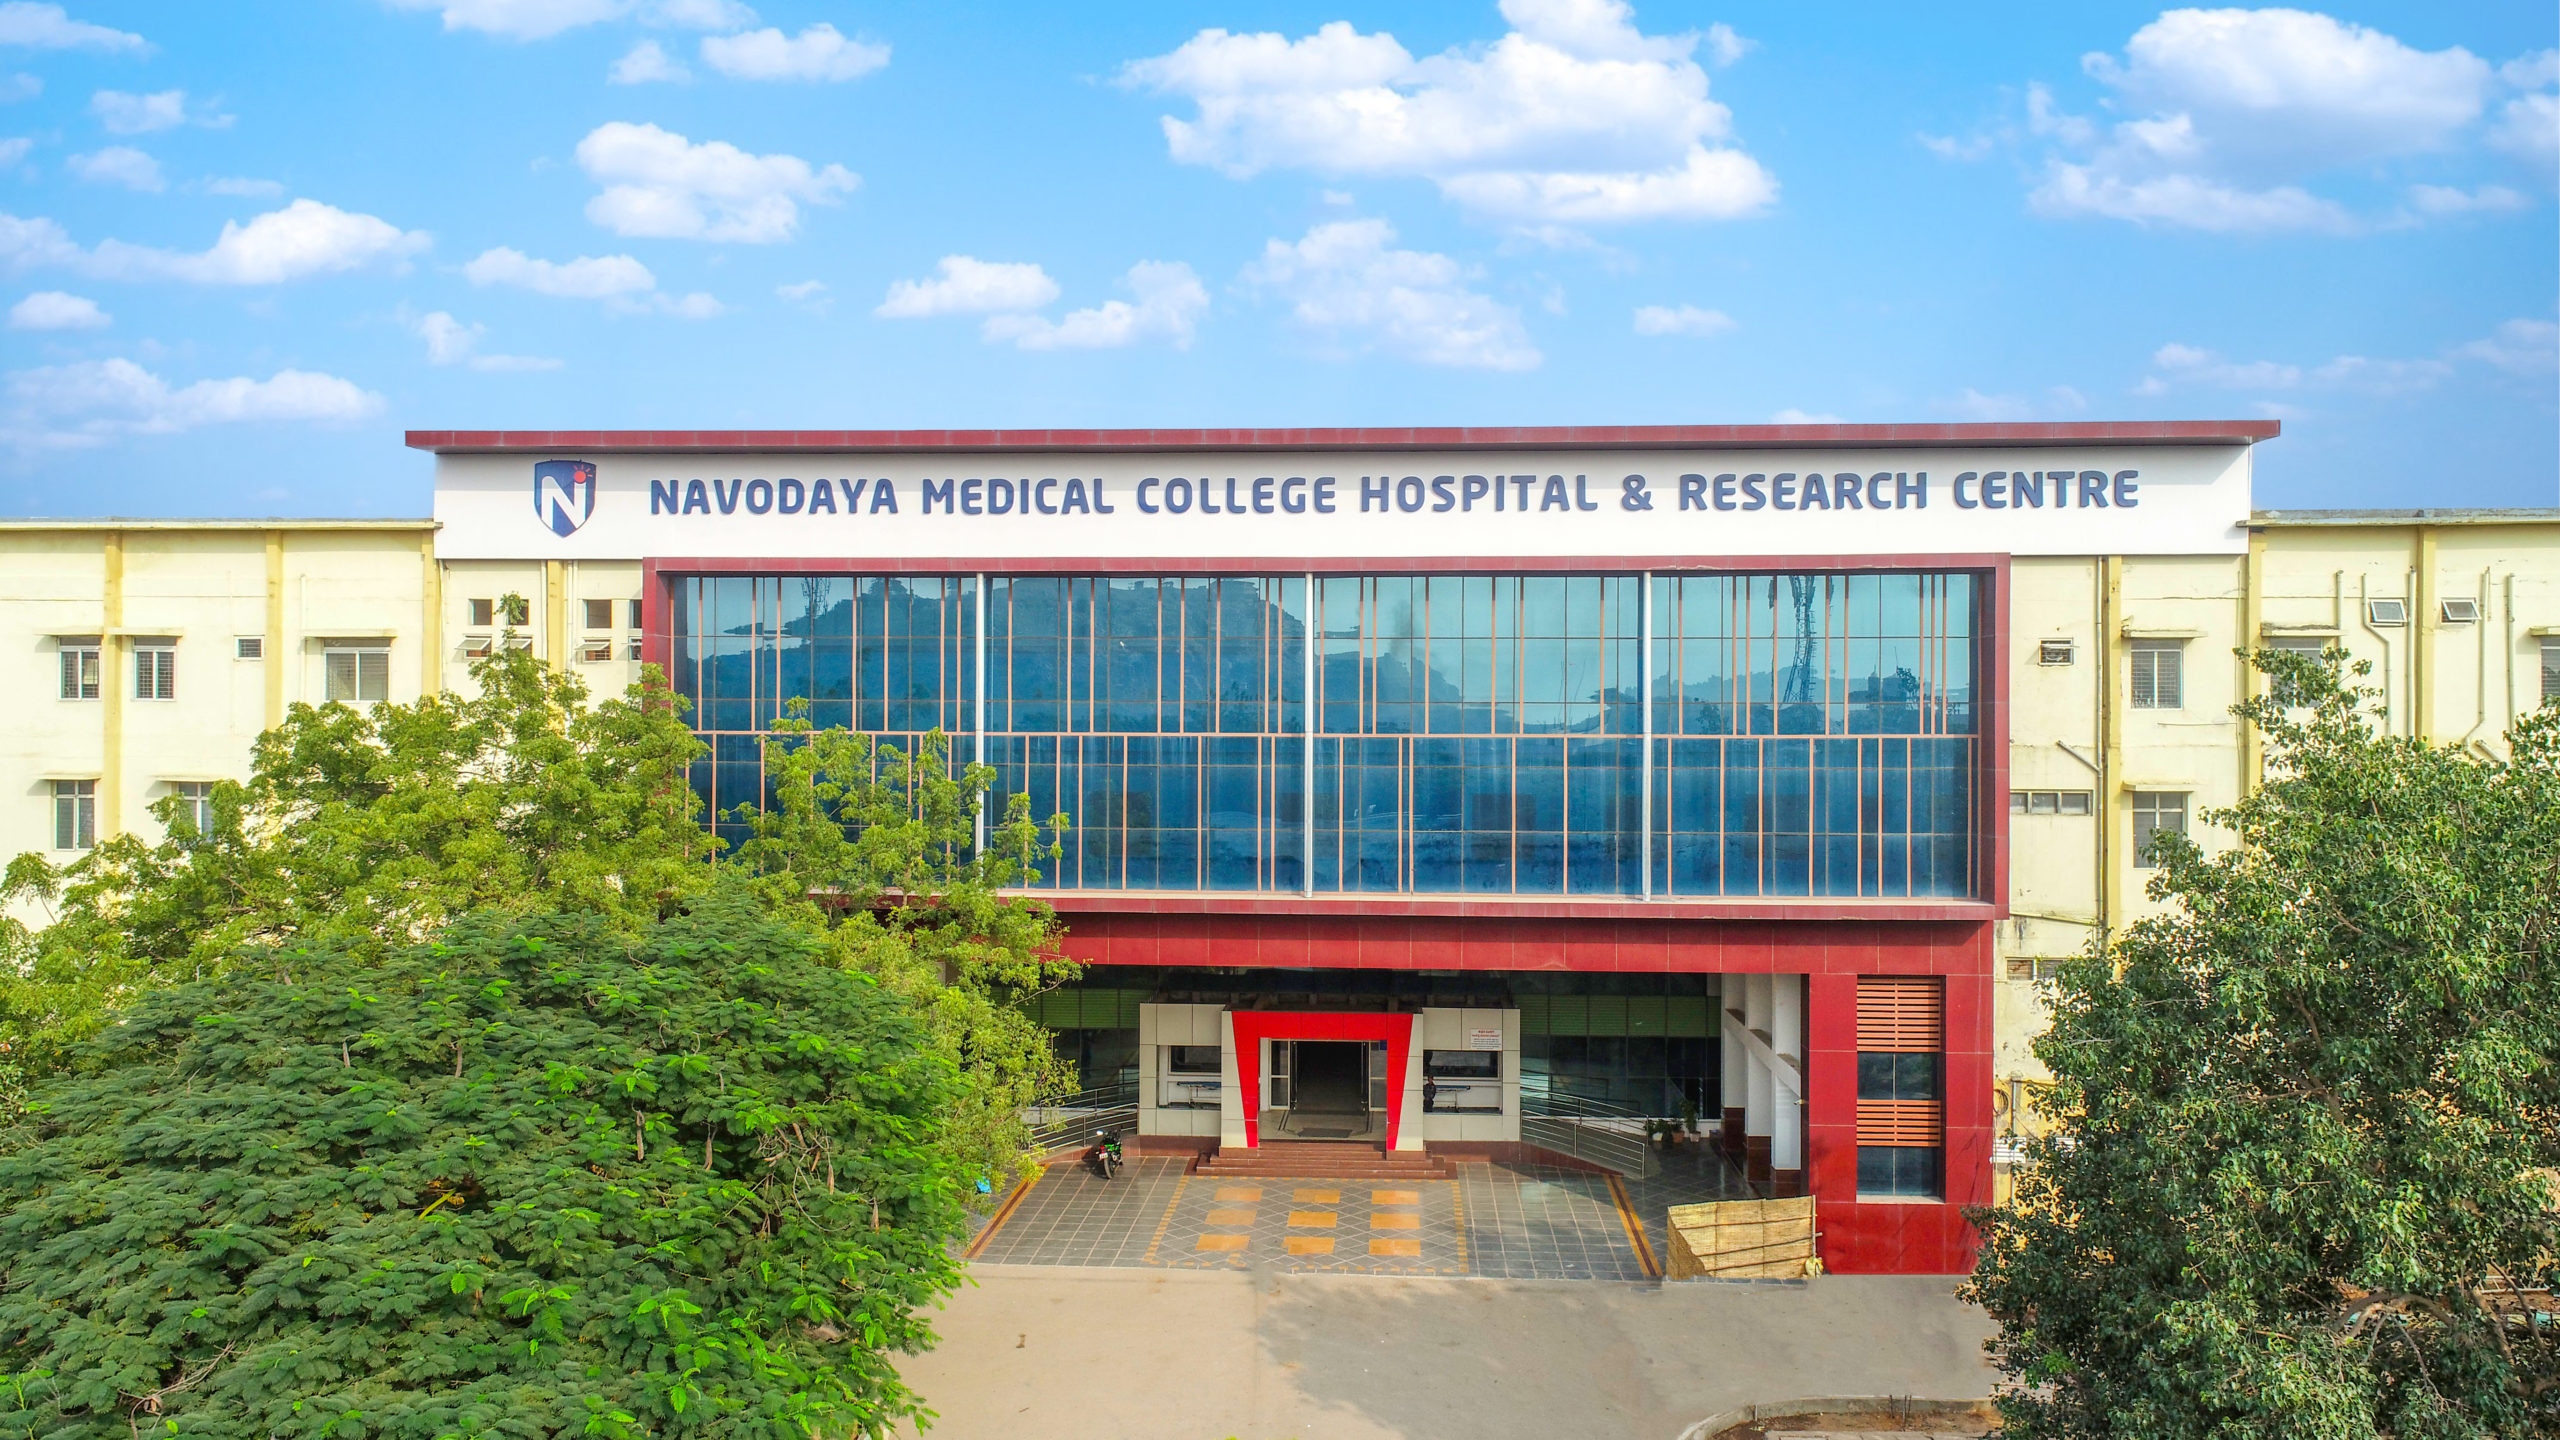 Navodaya Educational Trust